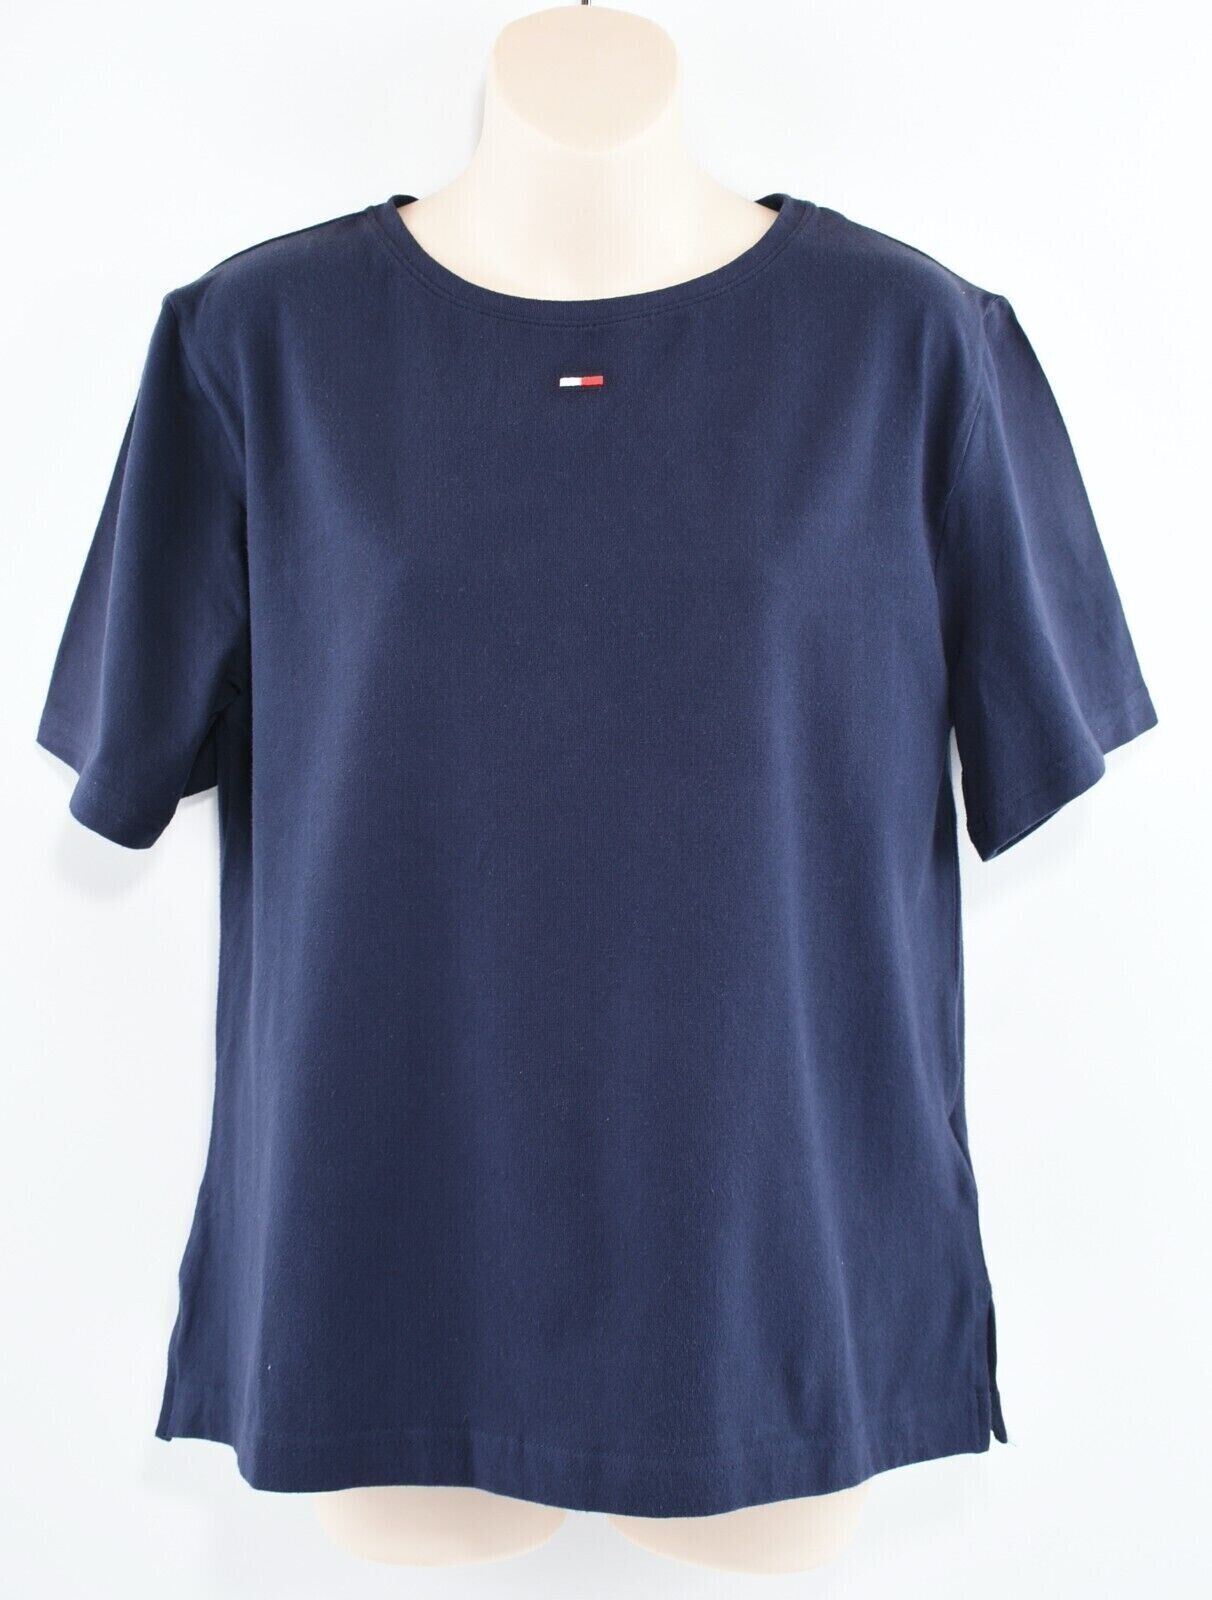 TOMMY HILFIGER Women's T-shirt Top, Navy Blue, size XS (UK 8)